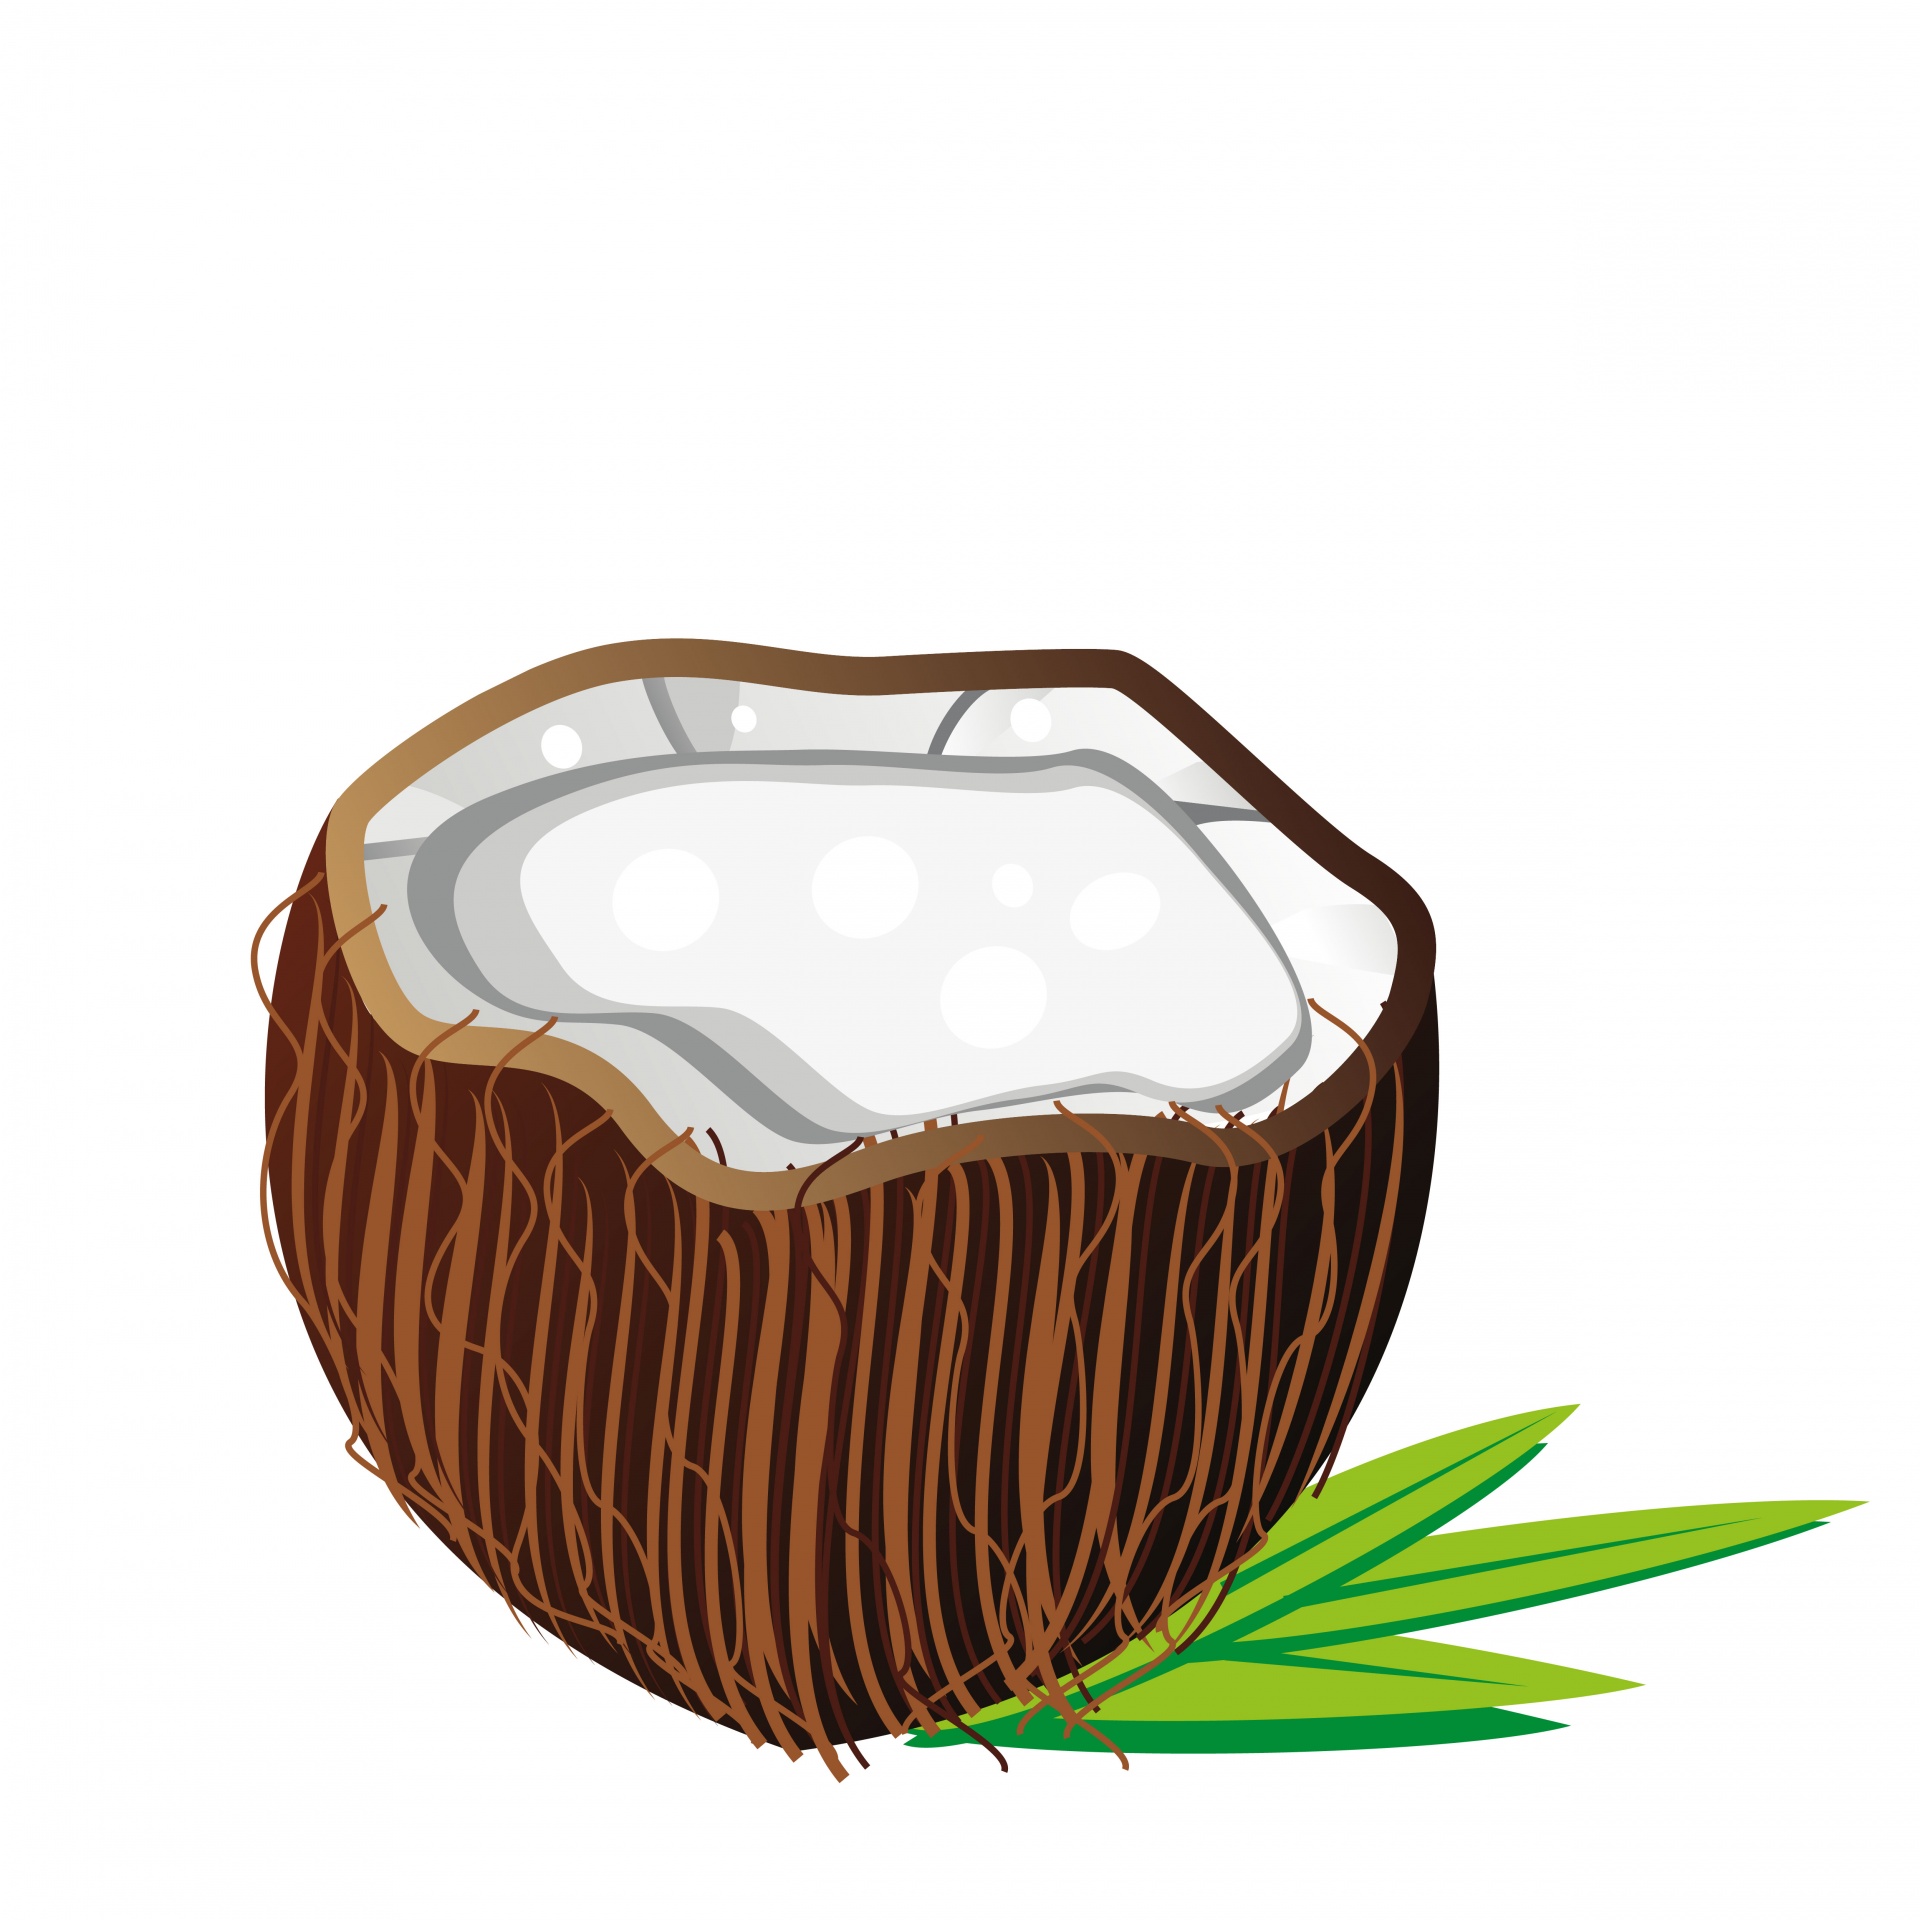 Kokosnuss Kostenloses Stock Bild Public Domain Pictures